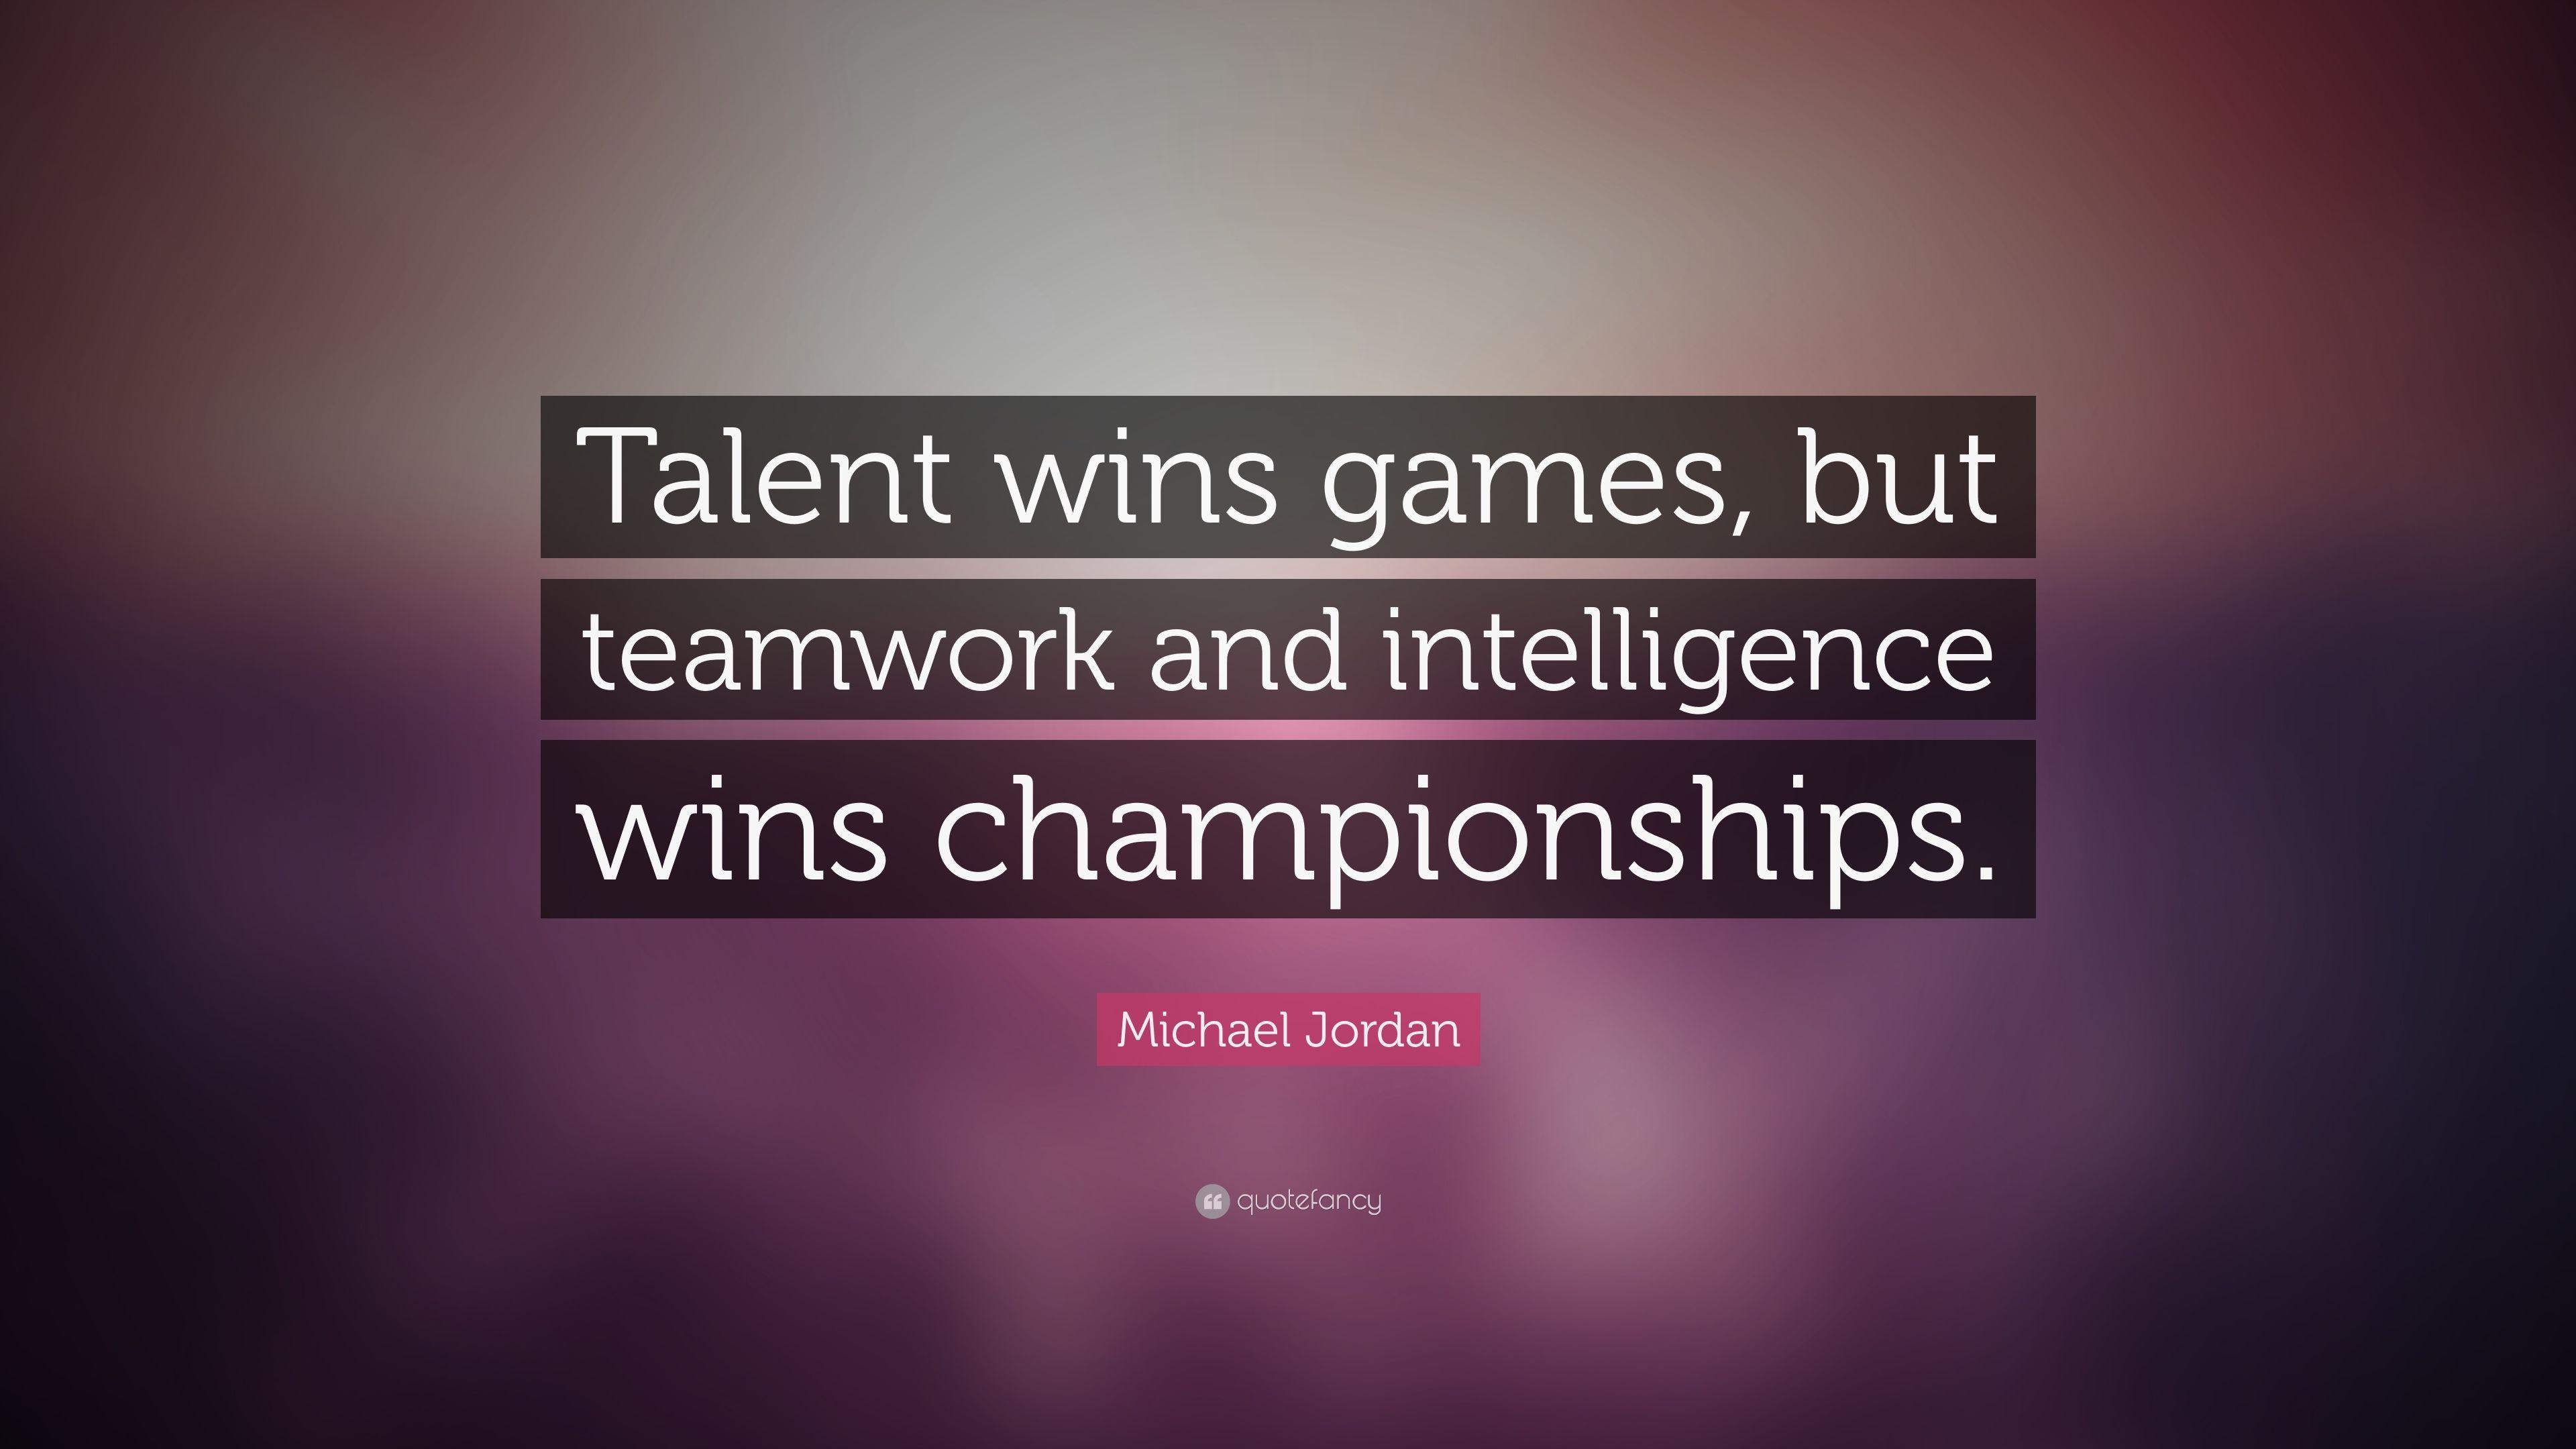 Michael Jordan Quote: “Talent wins games, but teamwork